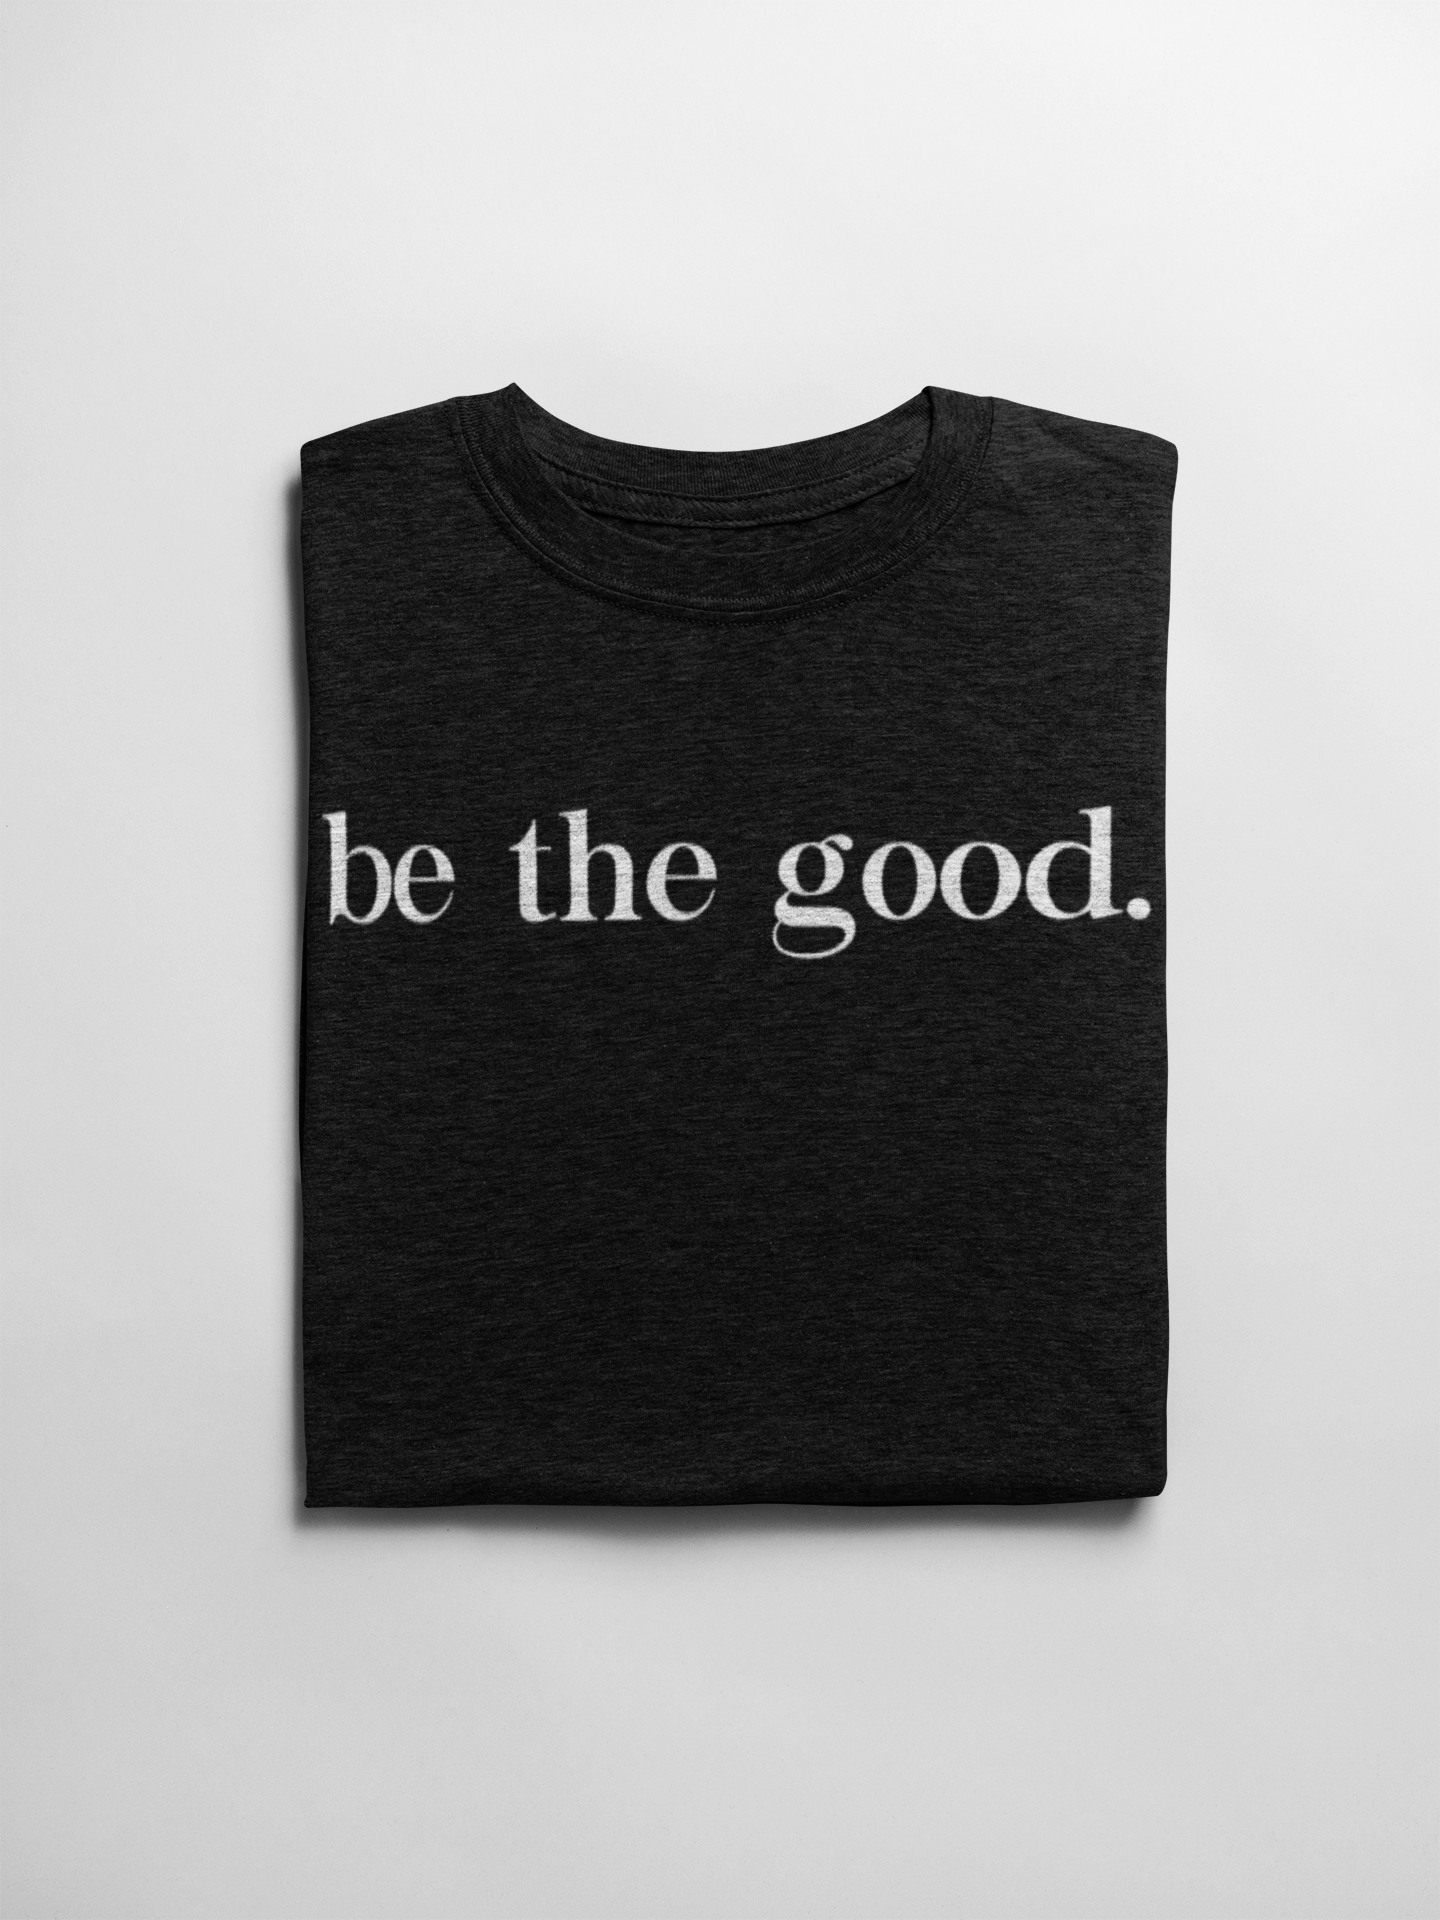 Be the Good - Womens T-Shirt